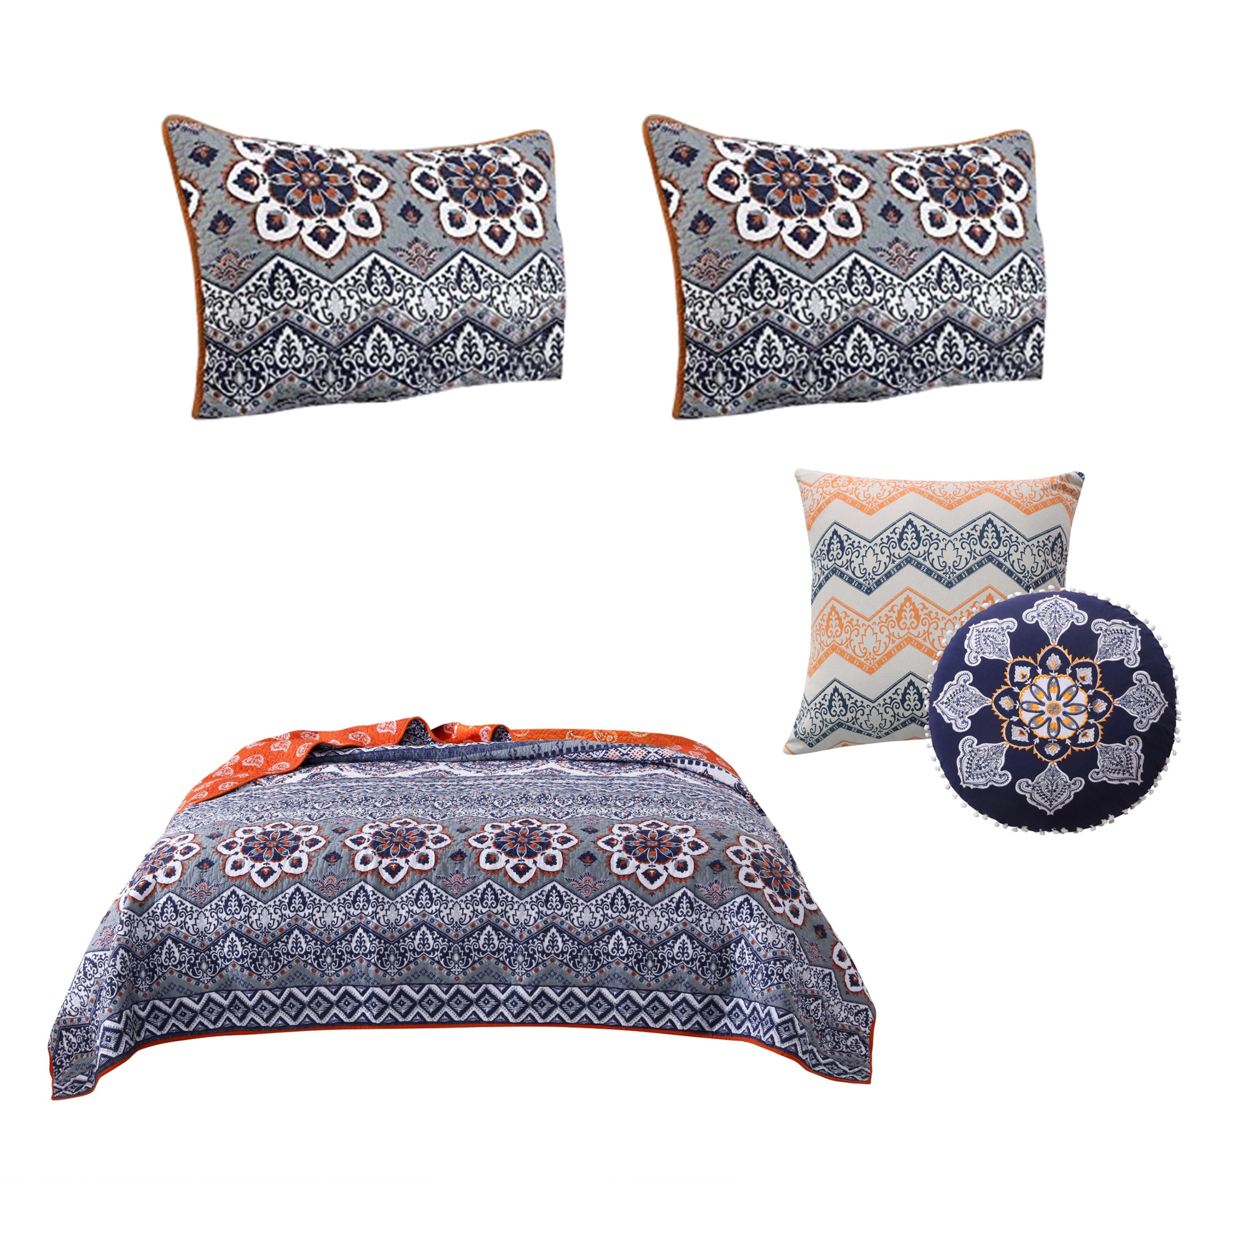 Damask Print King Quilt Set With Embroidered Pillows,Indigo Blue And Orange- Saltoro Sherpi